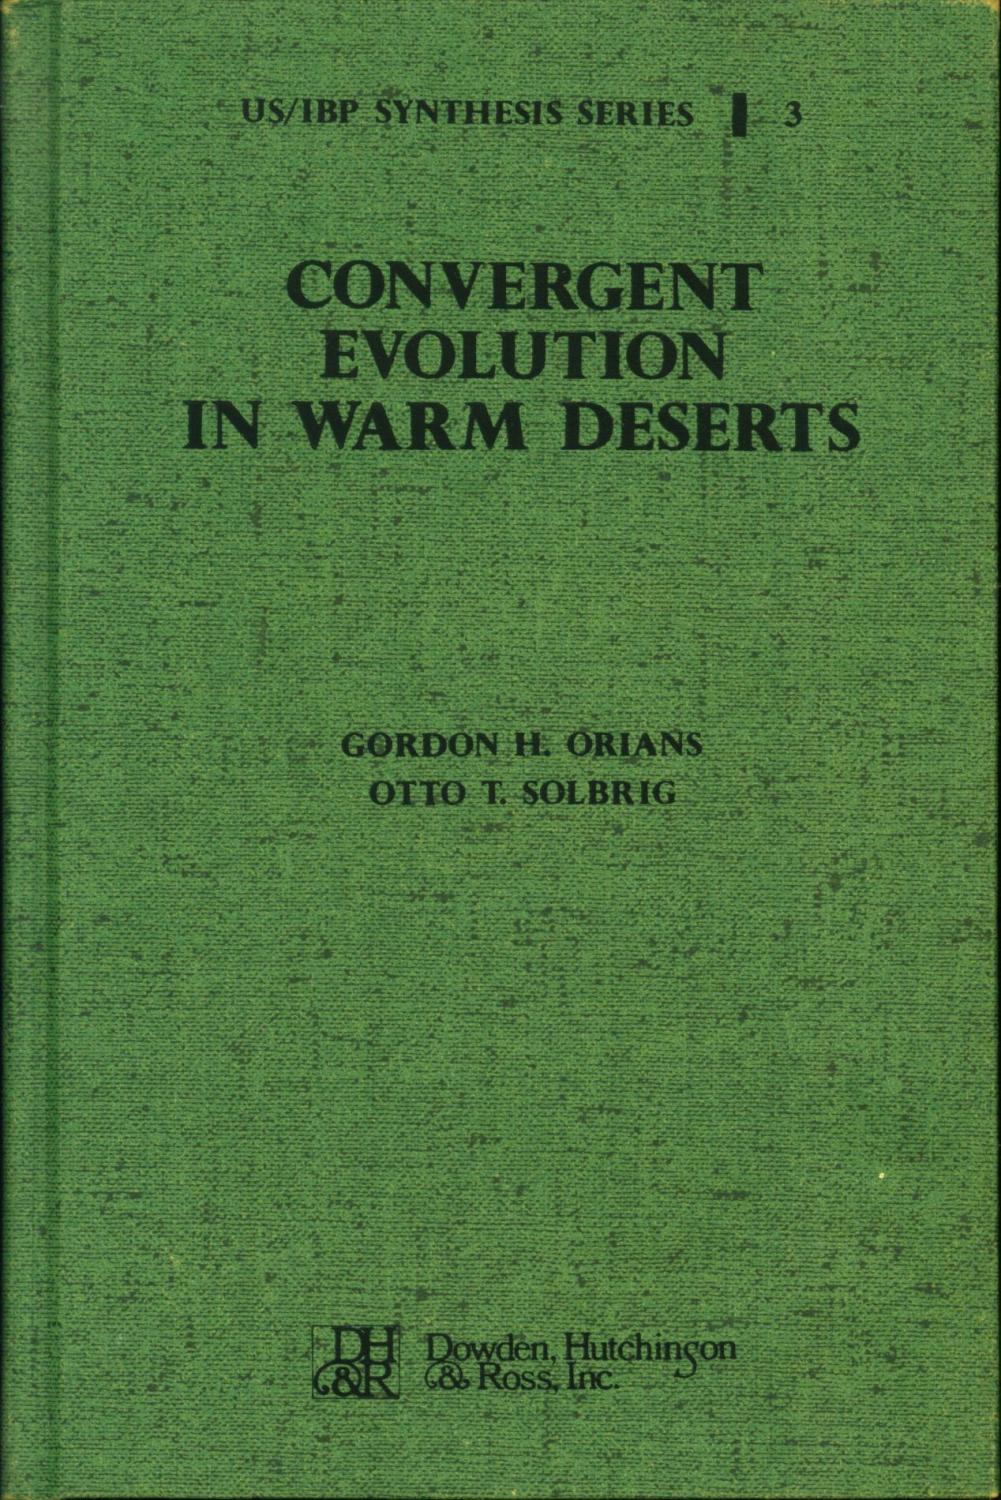 Orians Deserts Dh&R